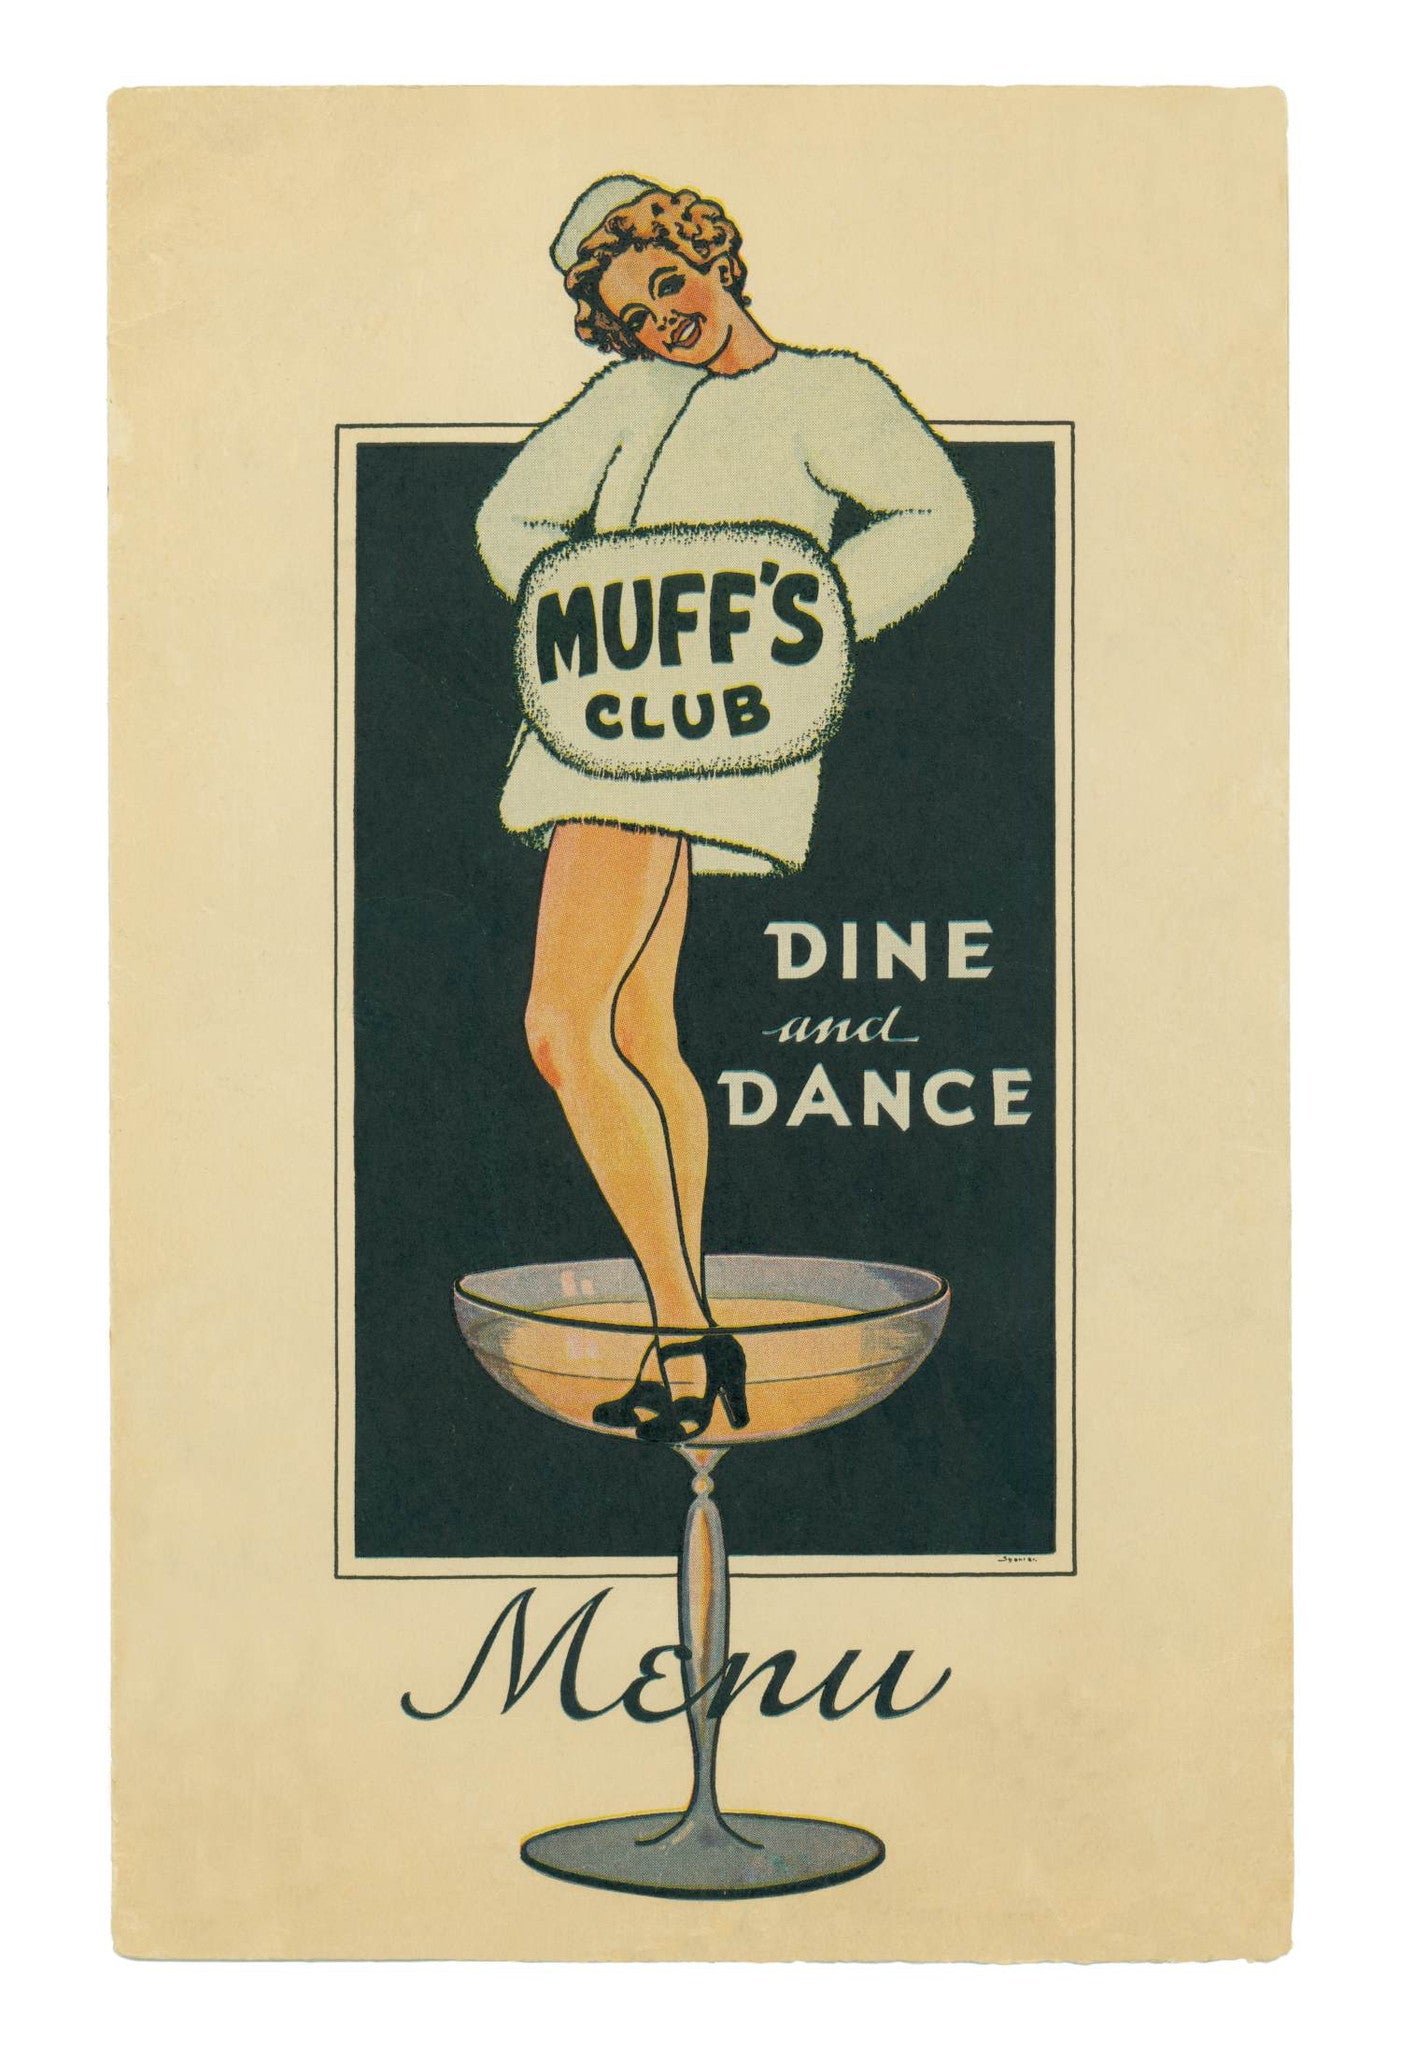 Muff's Club, Modesto, California, 1940s